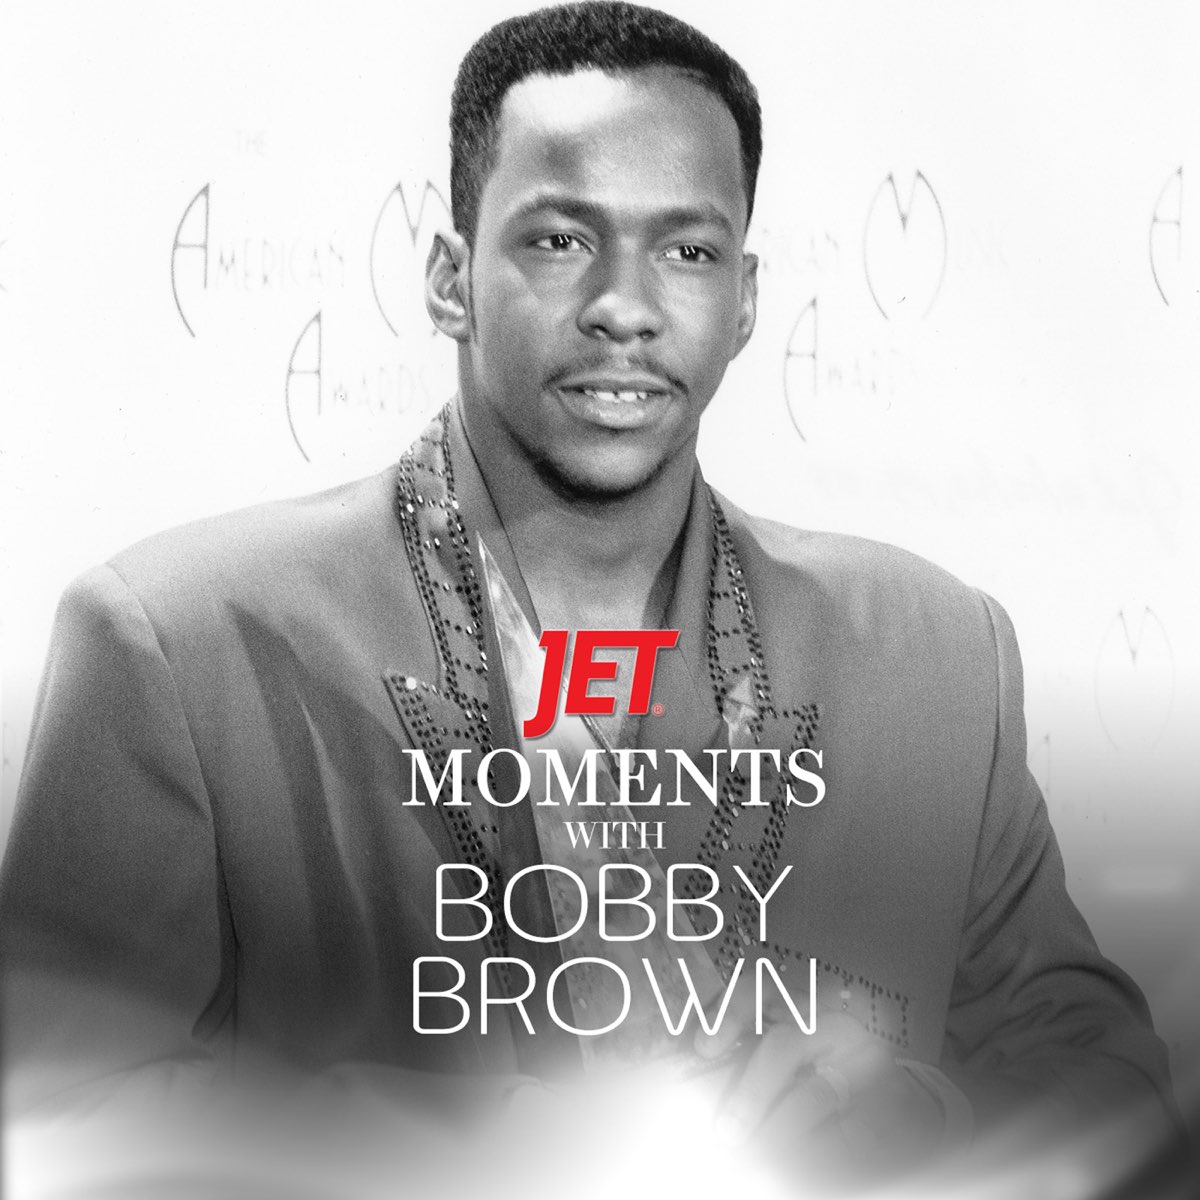 Слова браун. Bobby Brown Music. Исполнитель Bobby. Bobby Brown альбомы дискография фото.